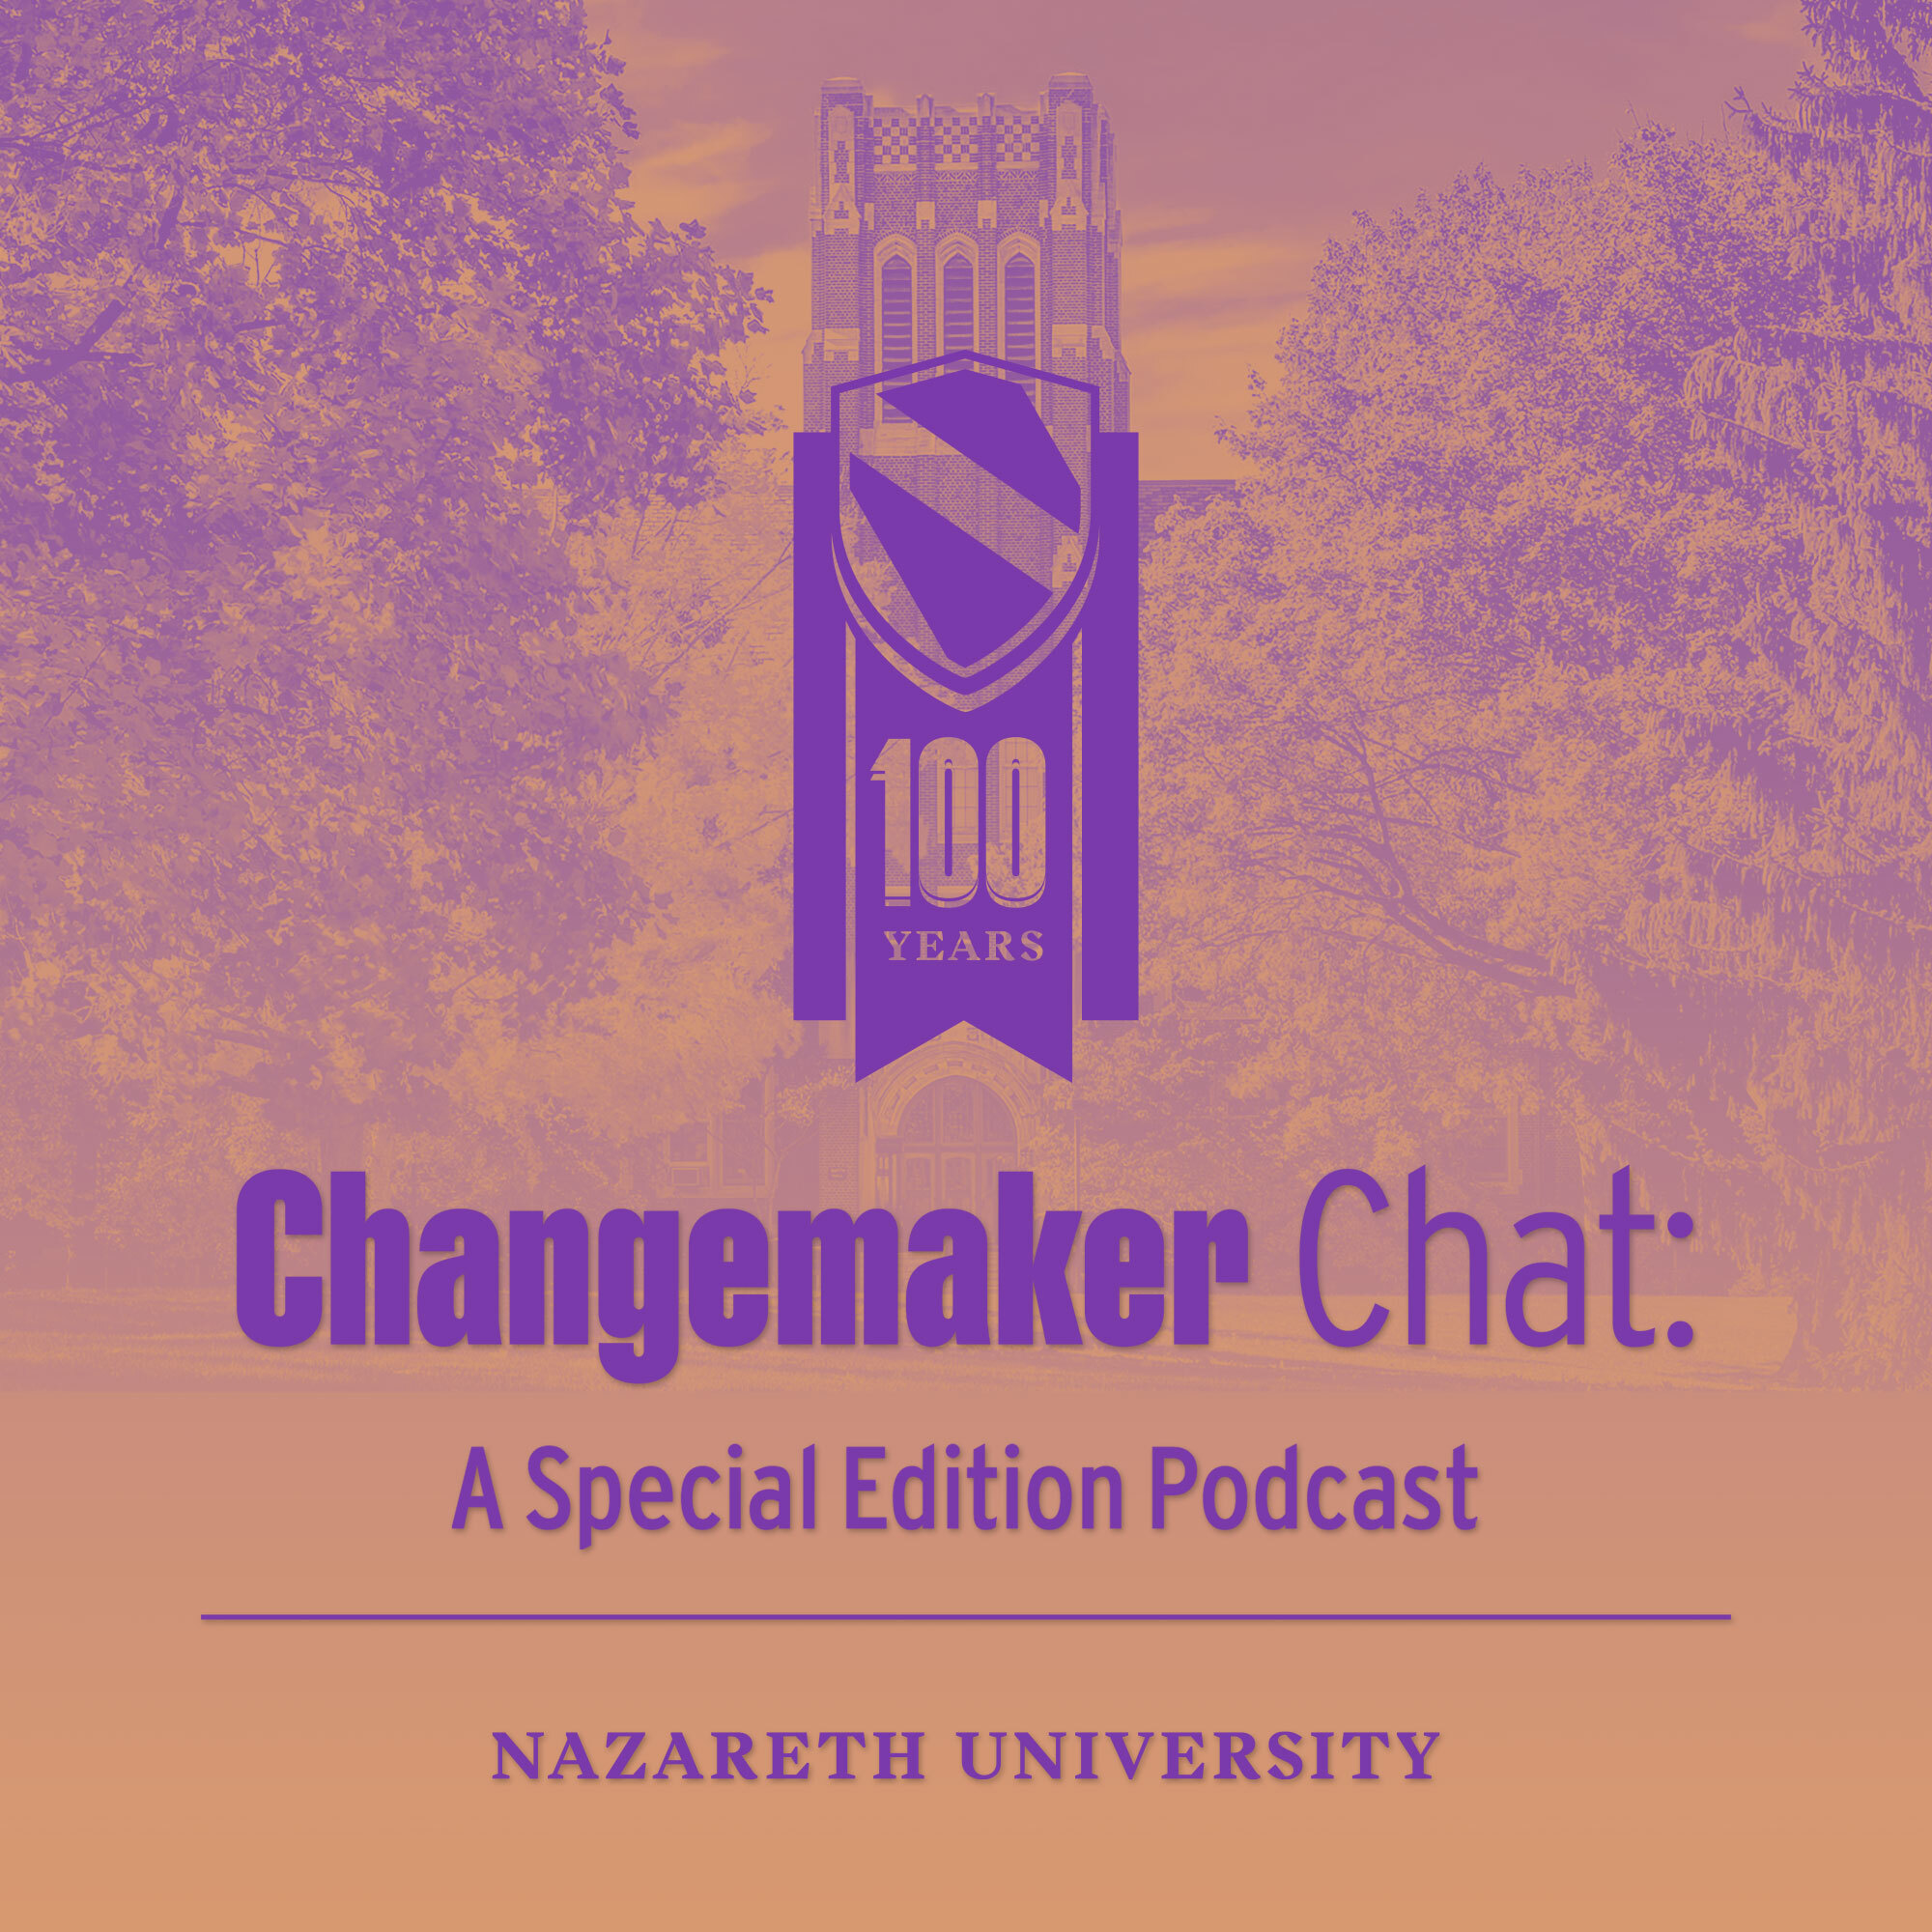 Changemaker Chat